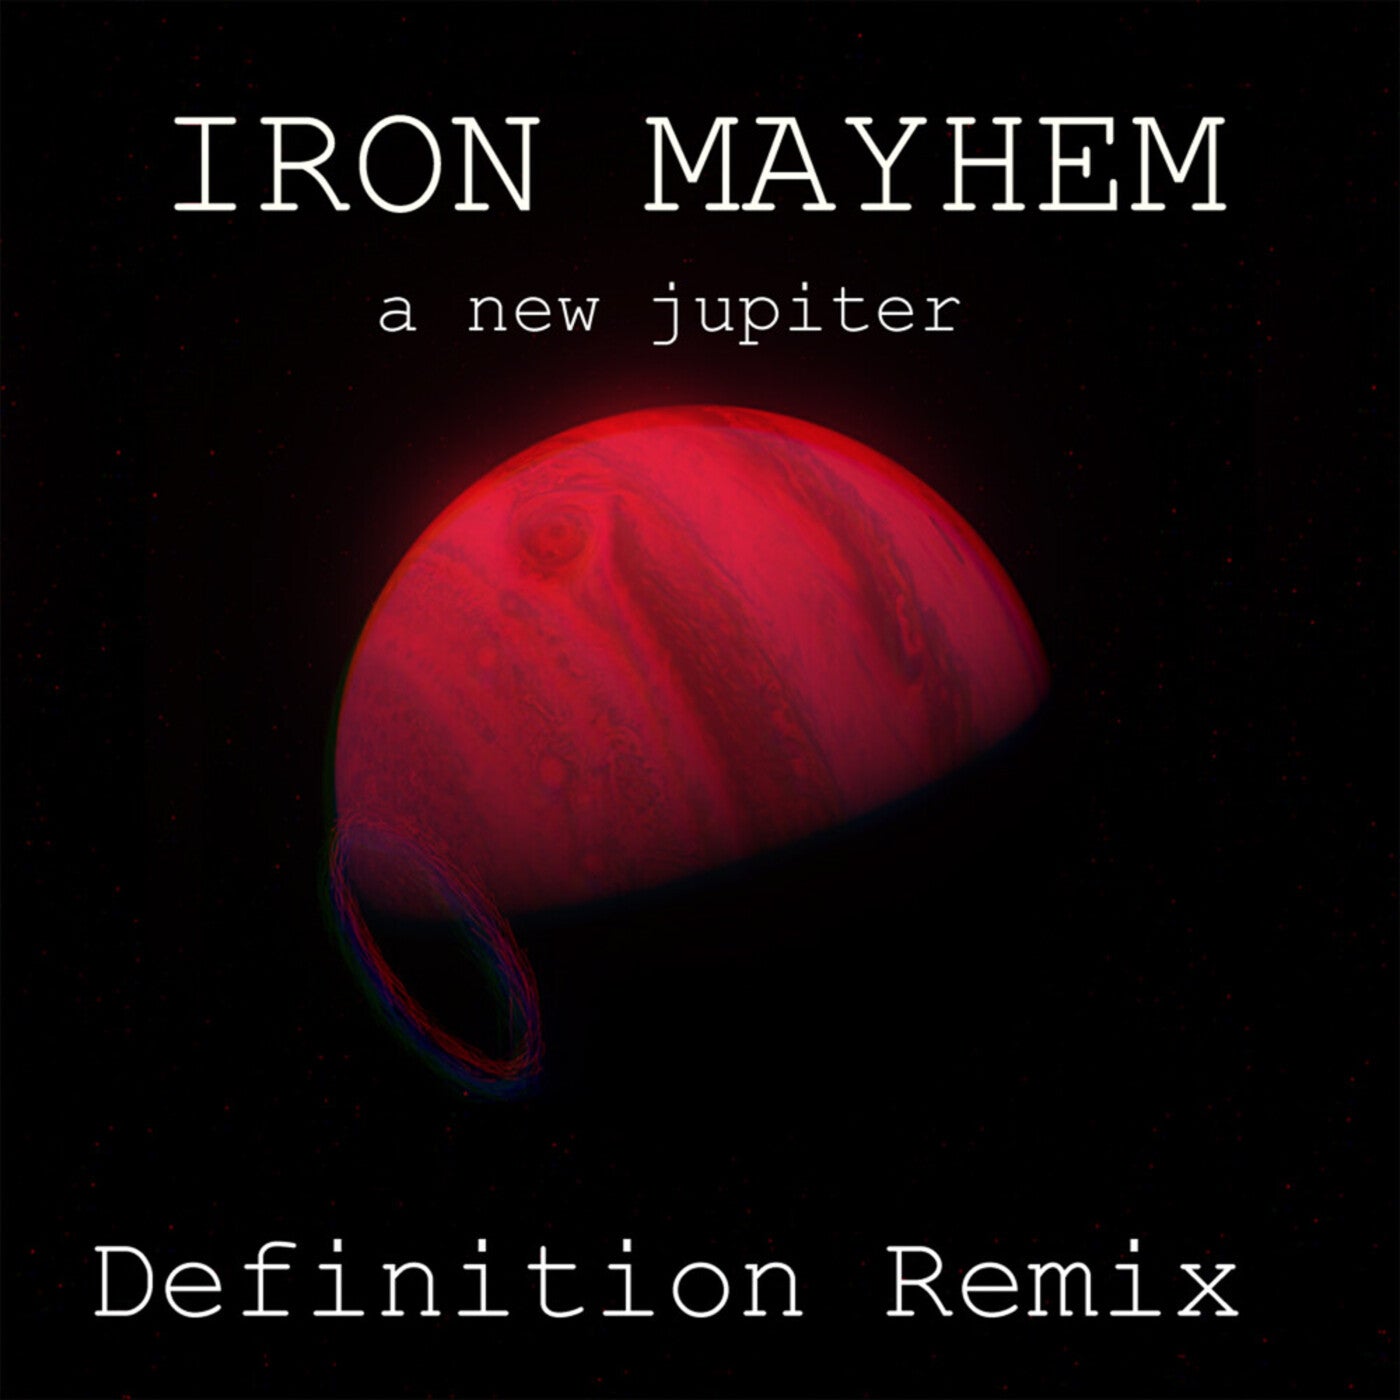 A New Jupiter (Definition Remix)